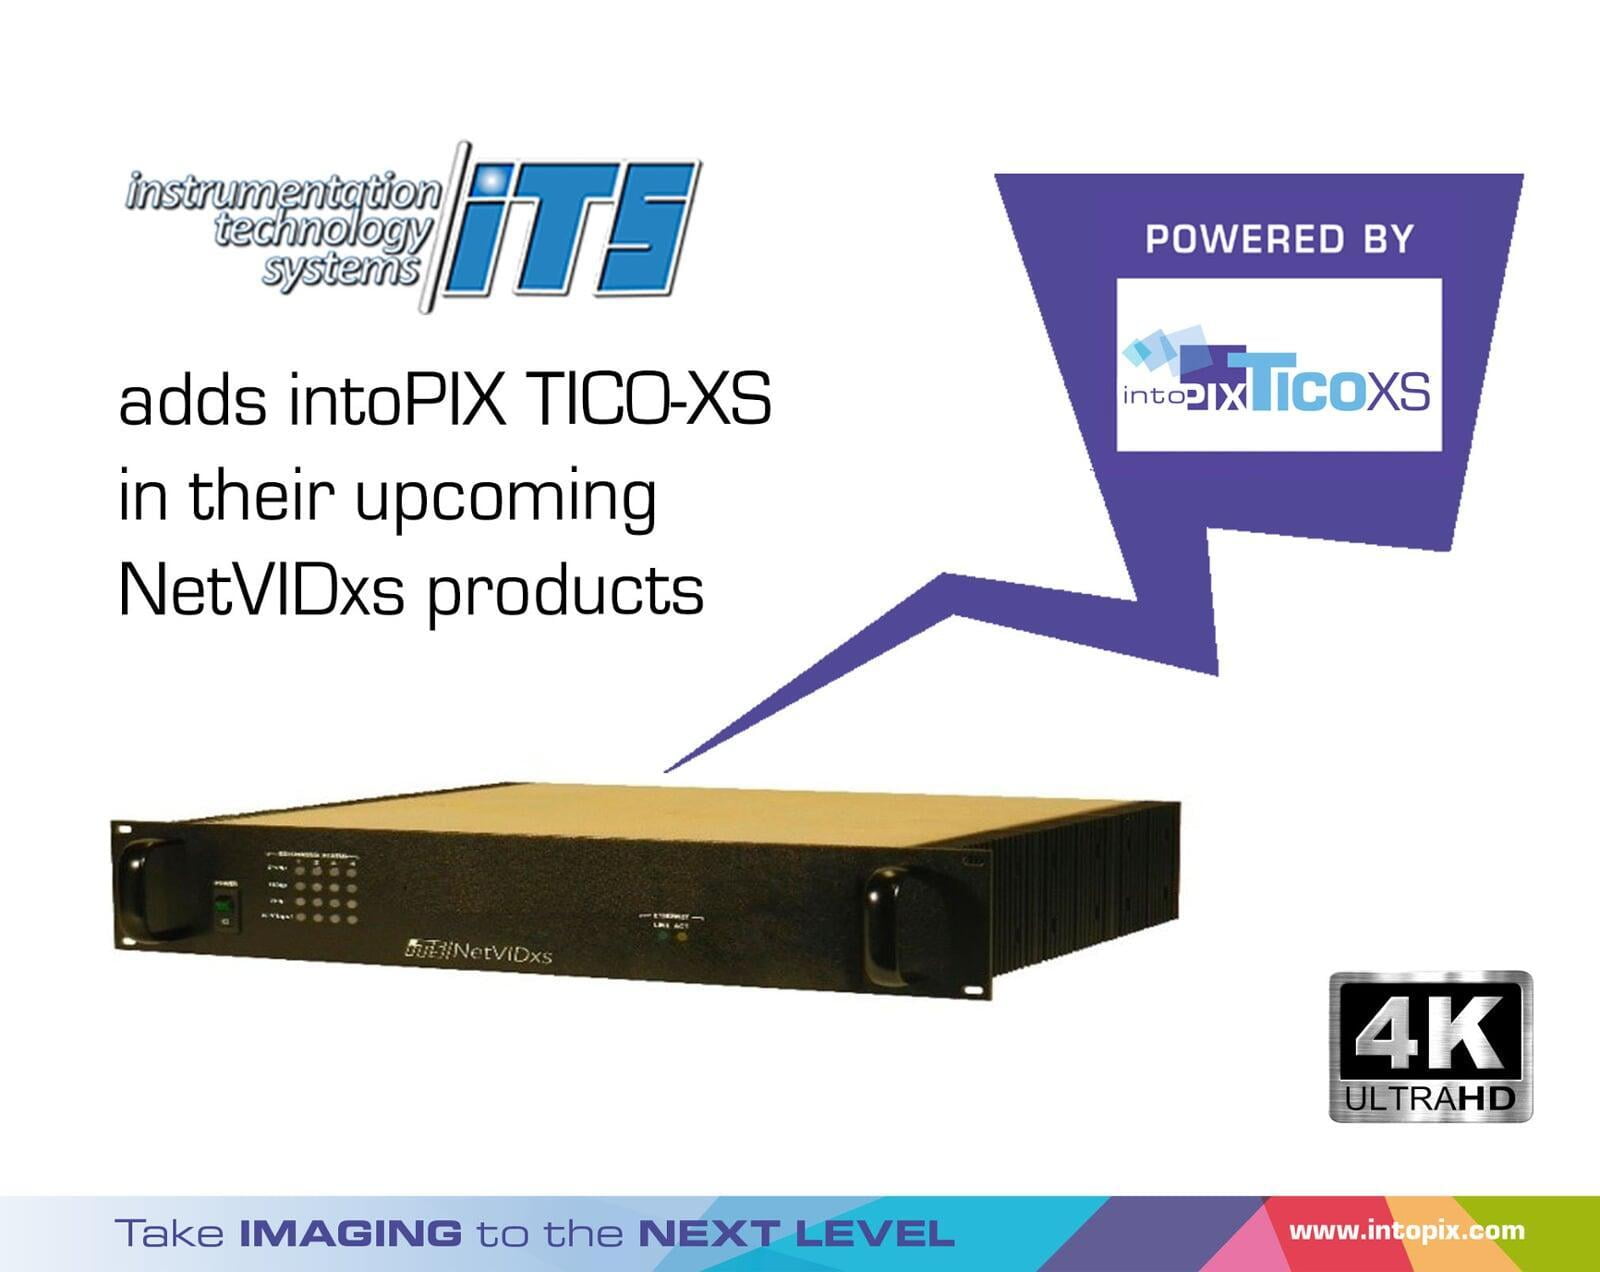 Instrumentation Technology Systems, 곧 출시될 NetVIDx에 intoPIX TicoXS를 추가